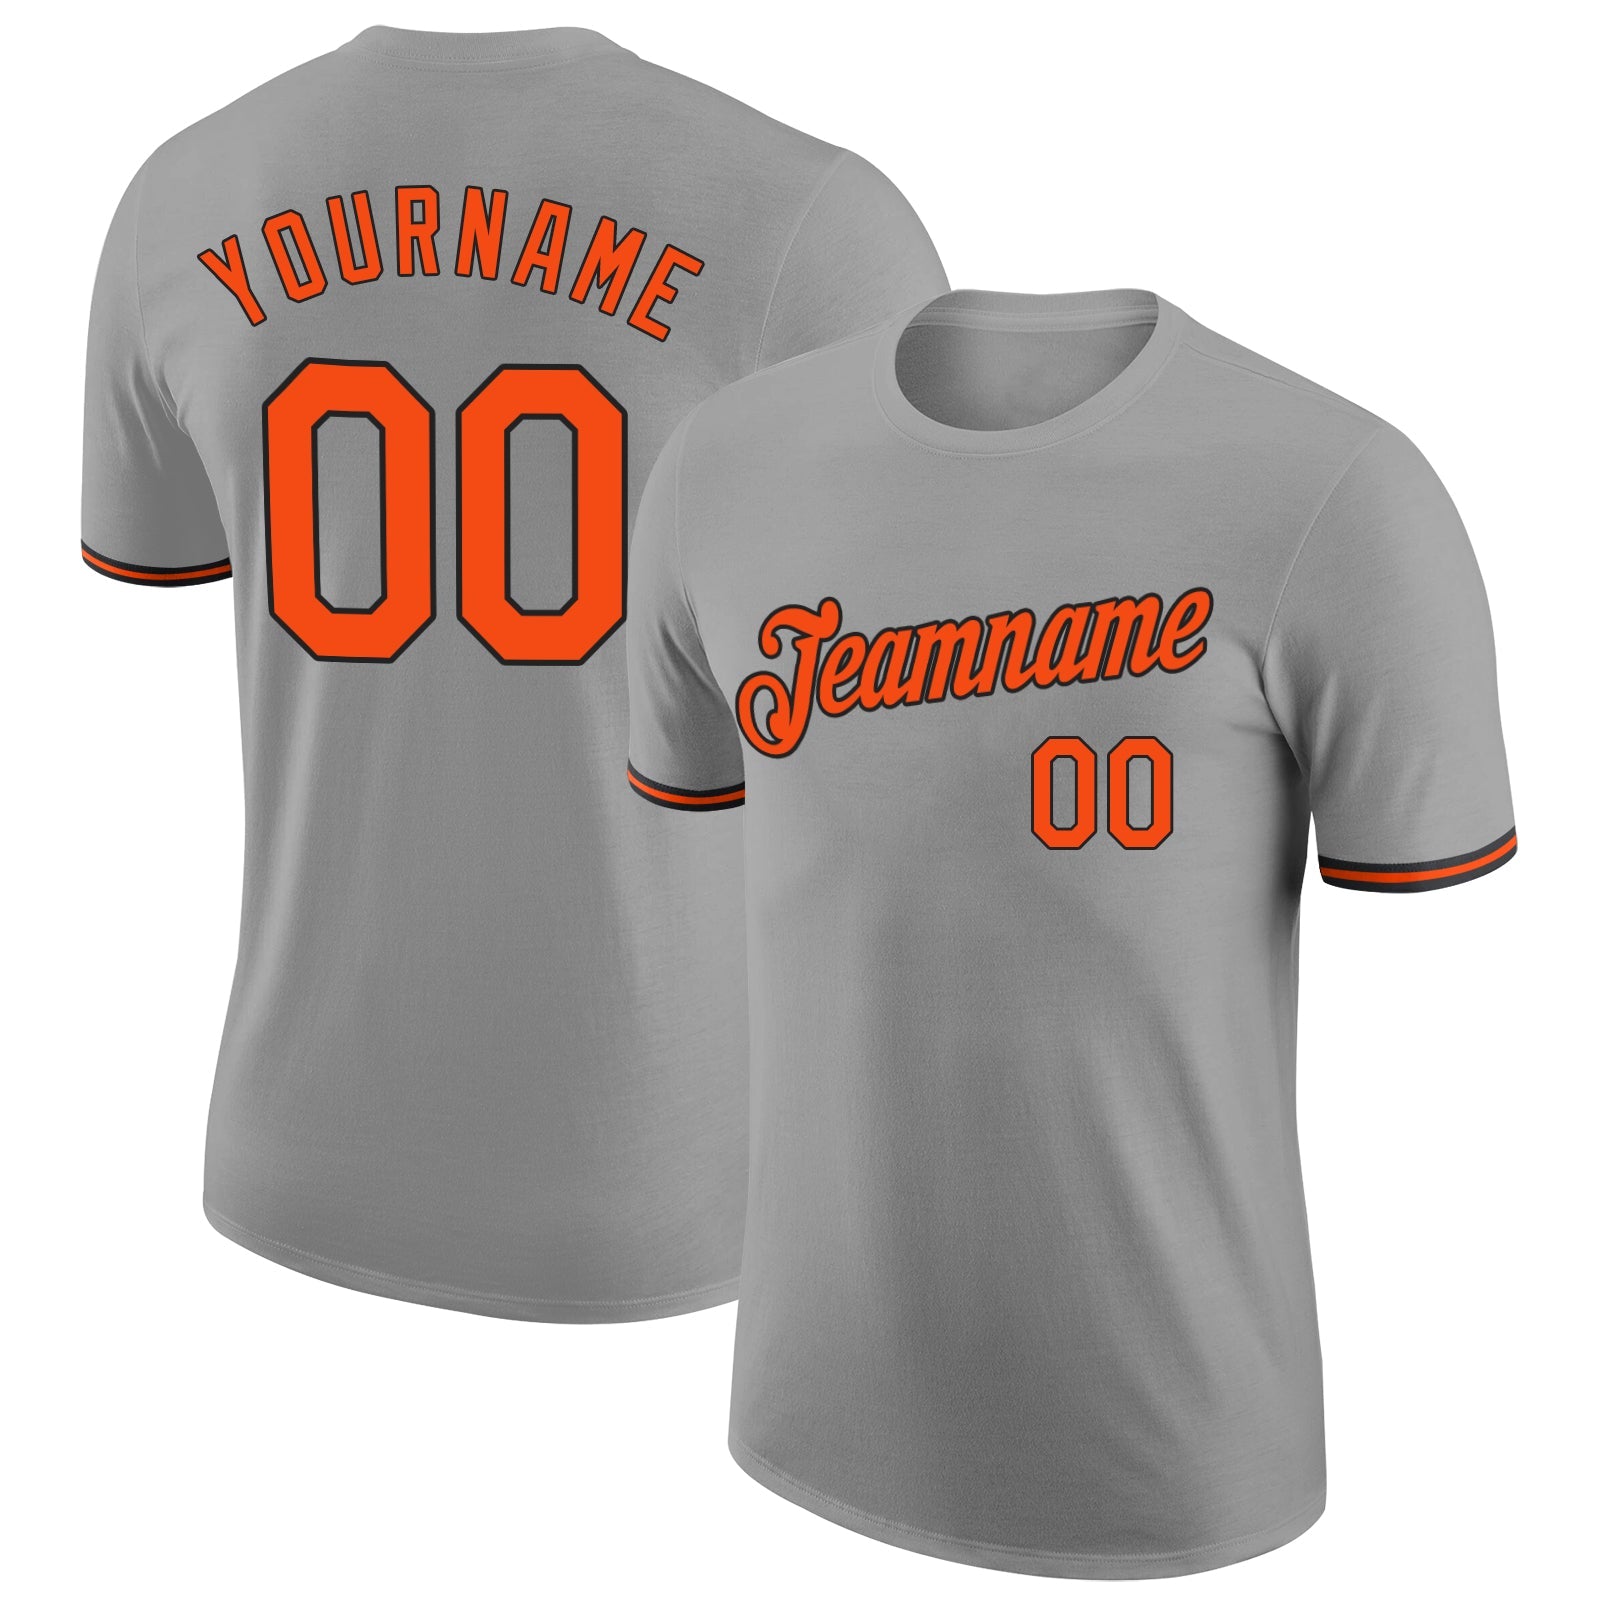 Custom Gray Orange-Black Performance T-Shirt